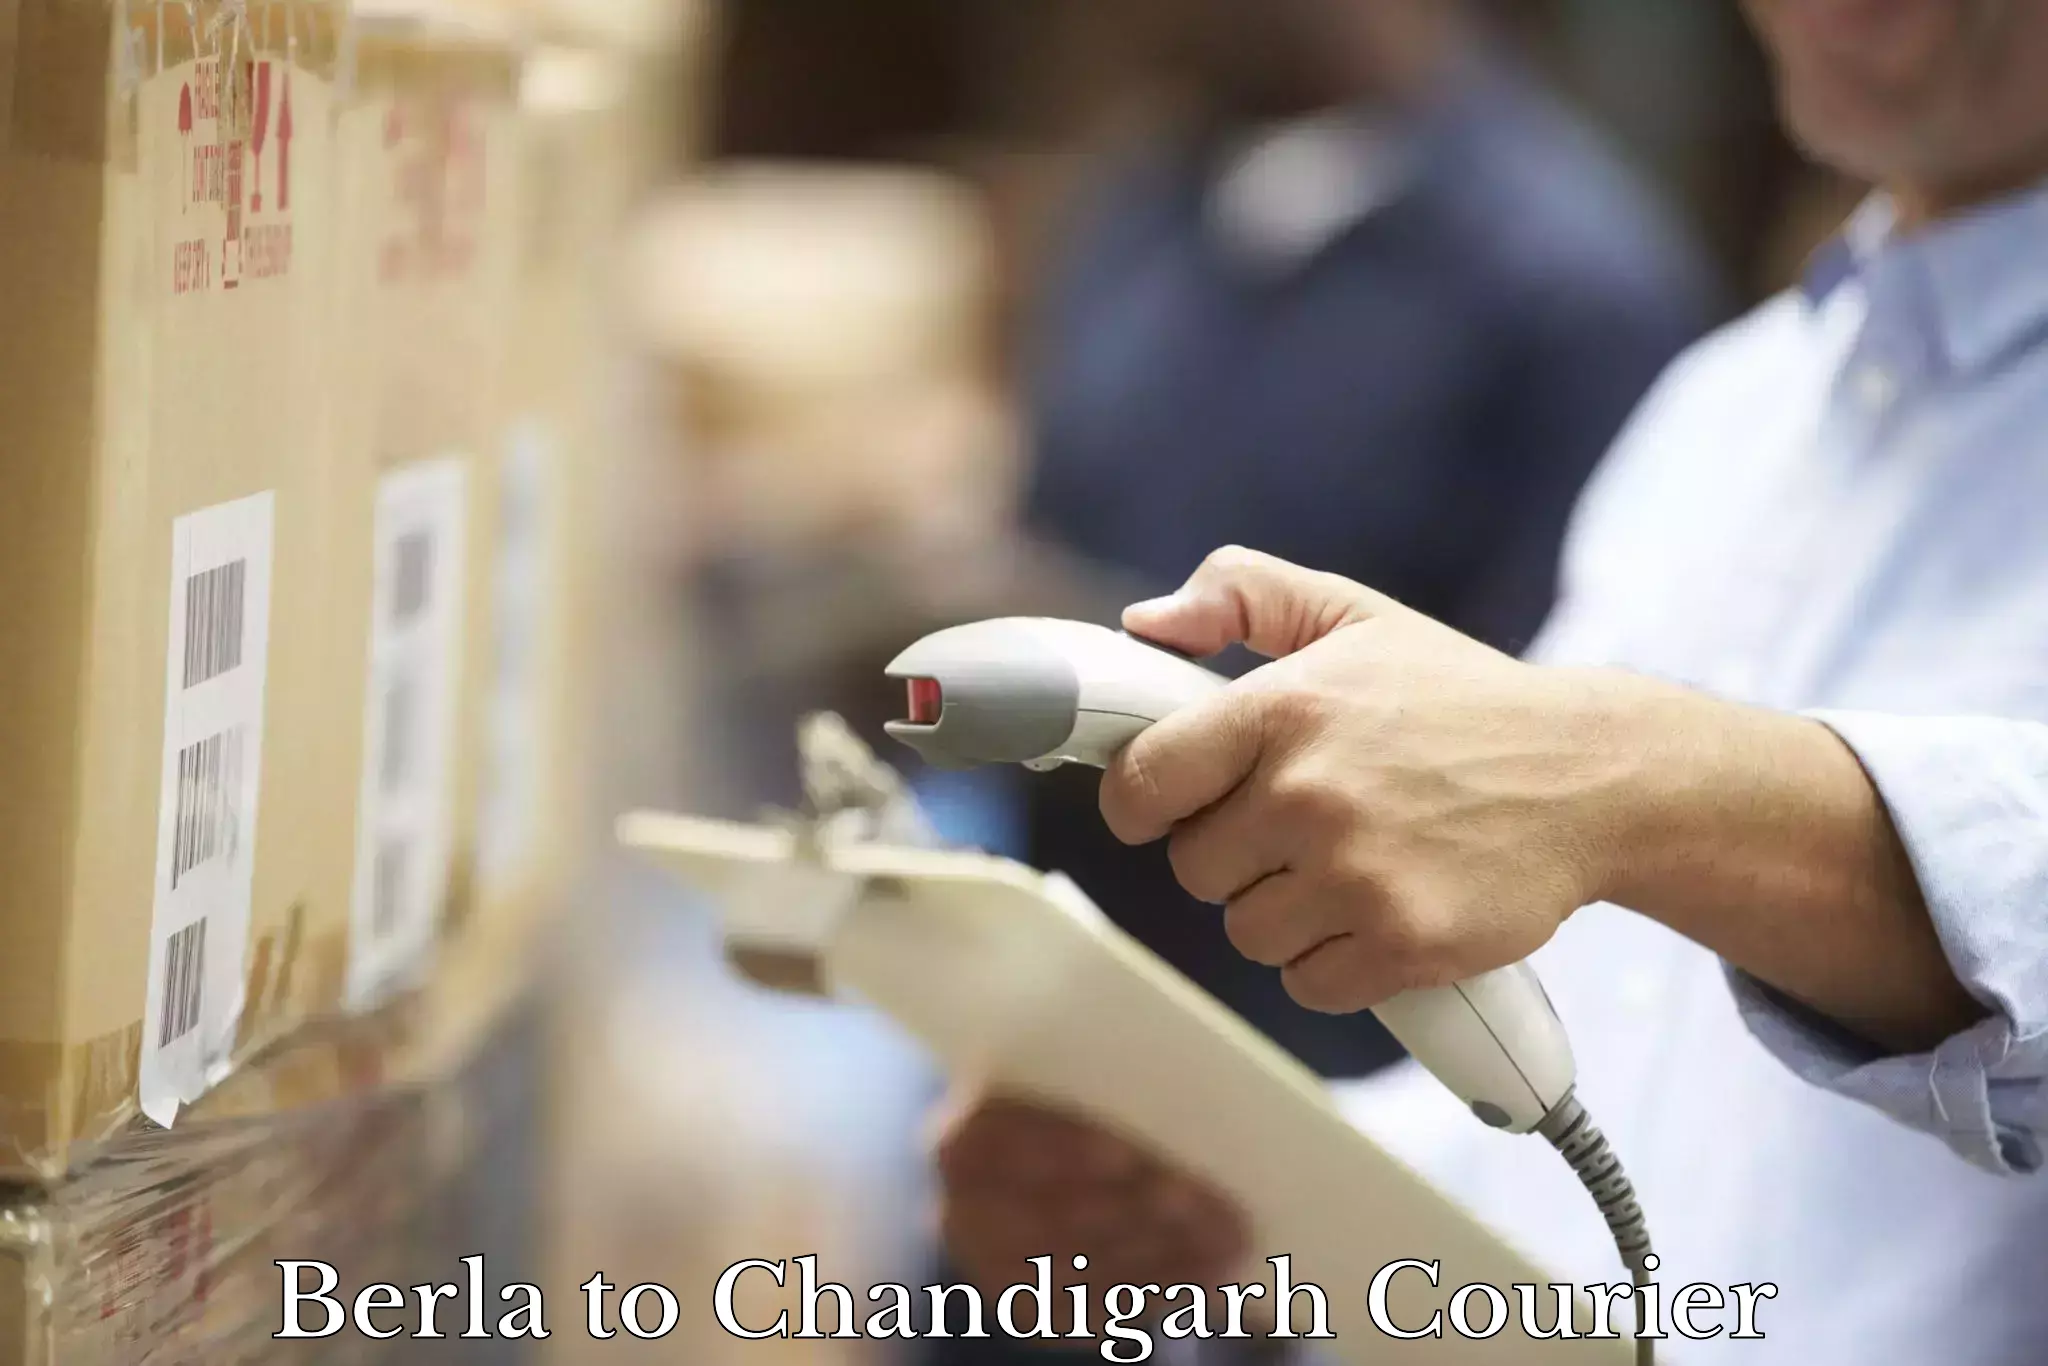 Courier app Berla to Chandigarh